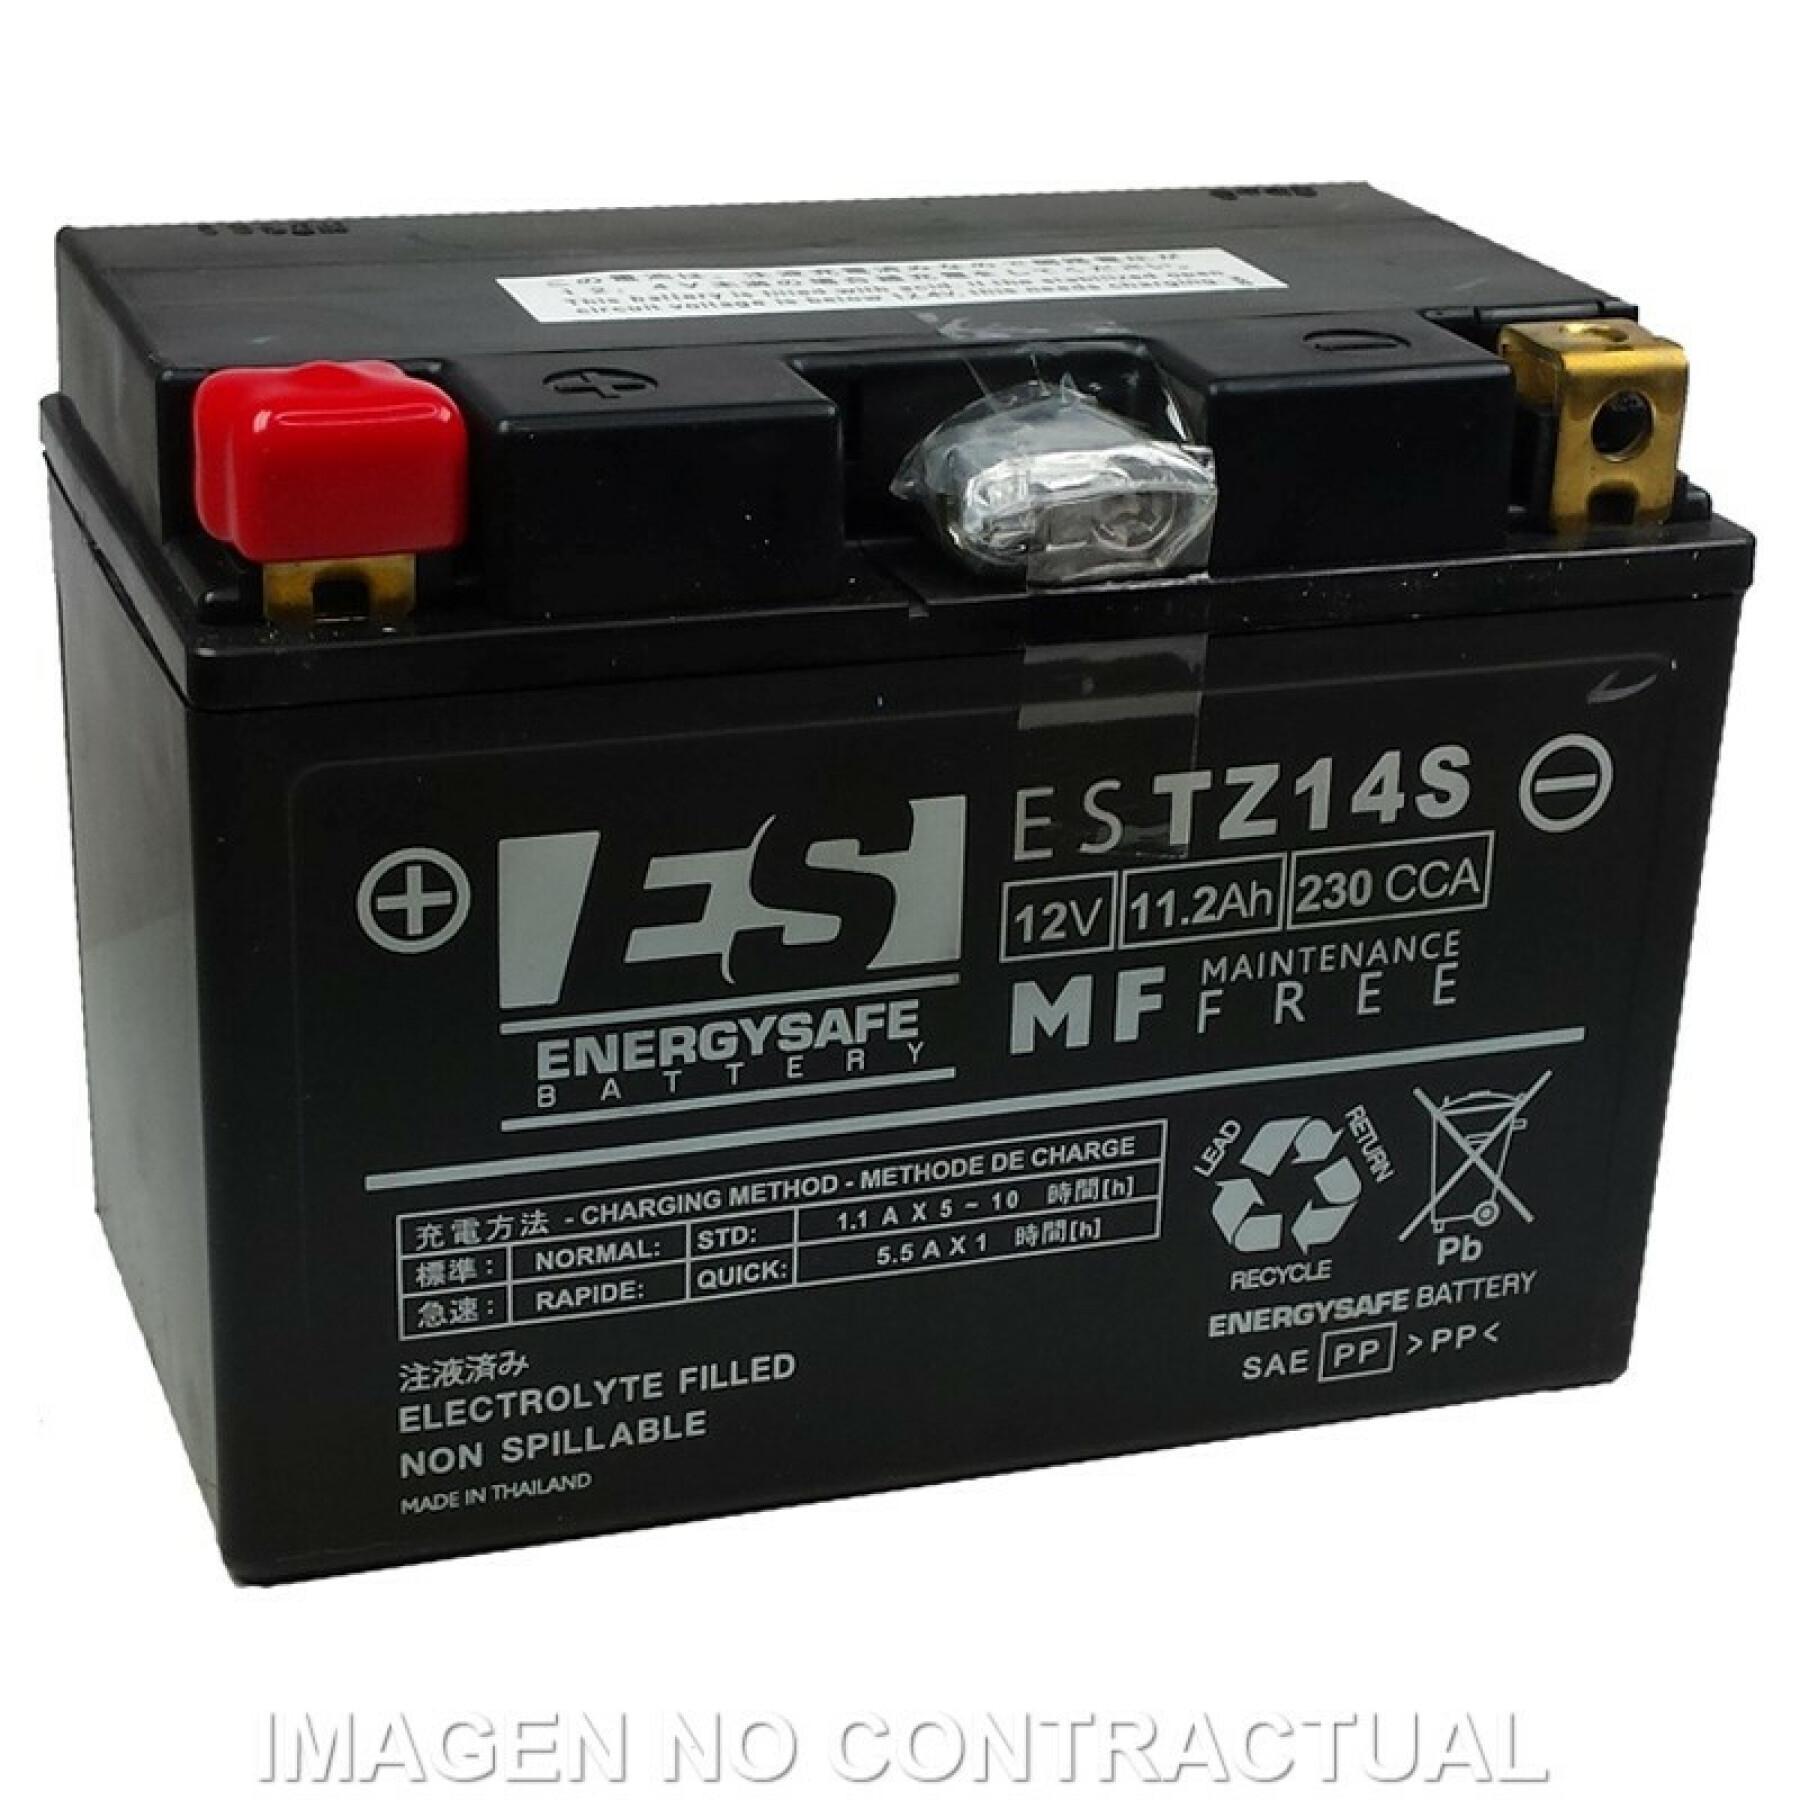 Motorradbatterie Energy Safe ESTZ14S 12V/11,2AH